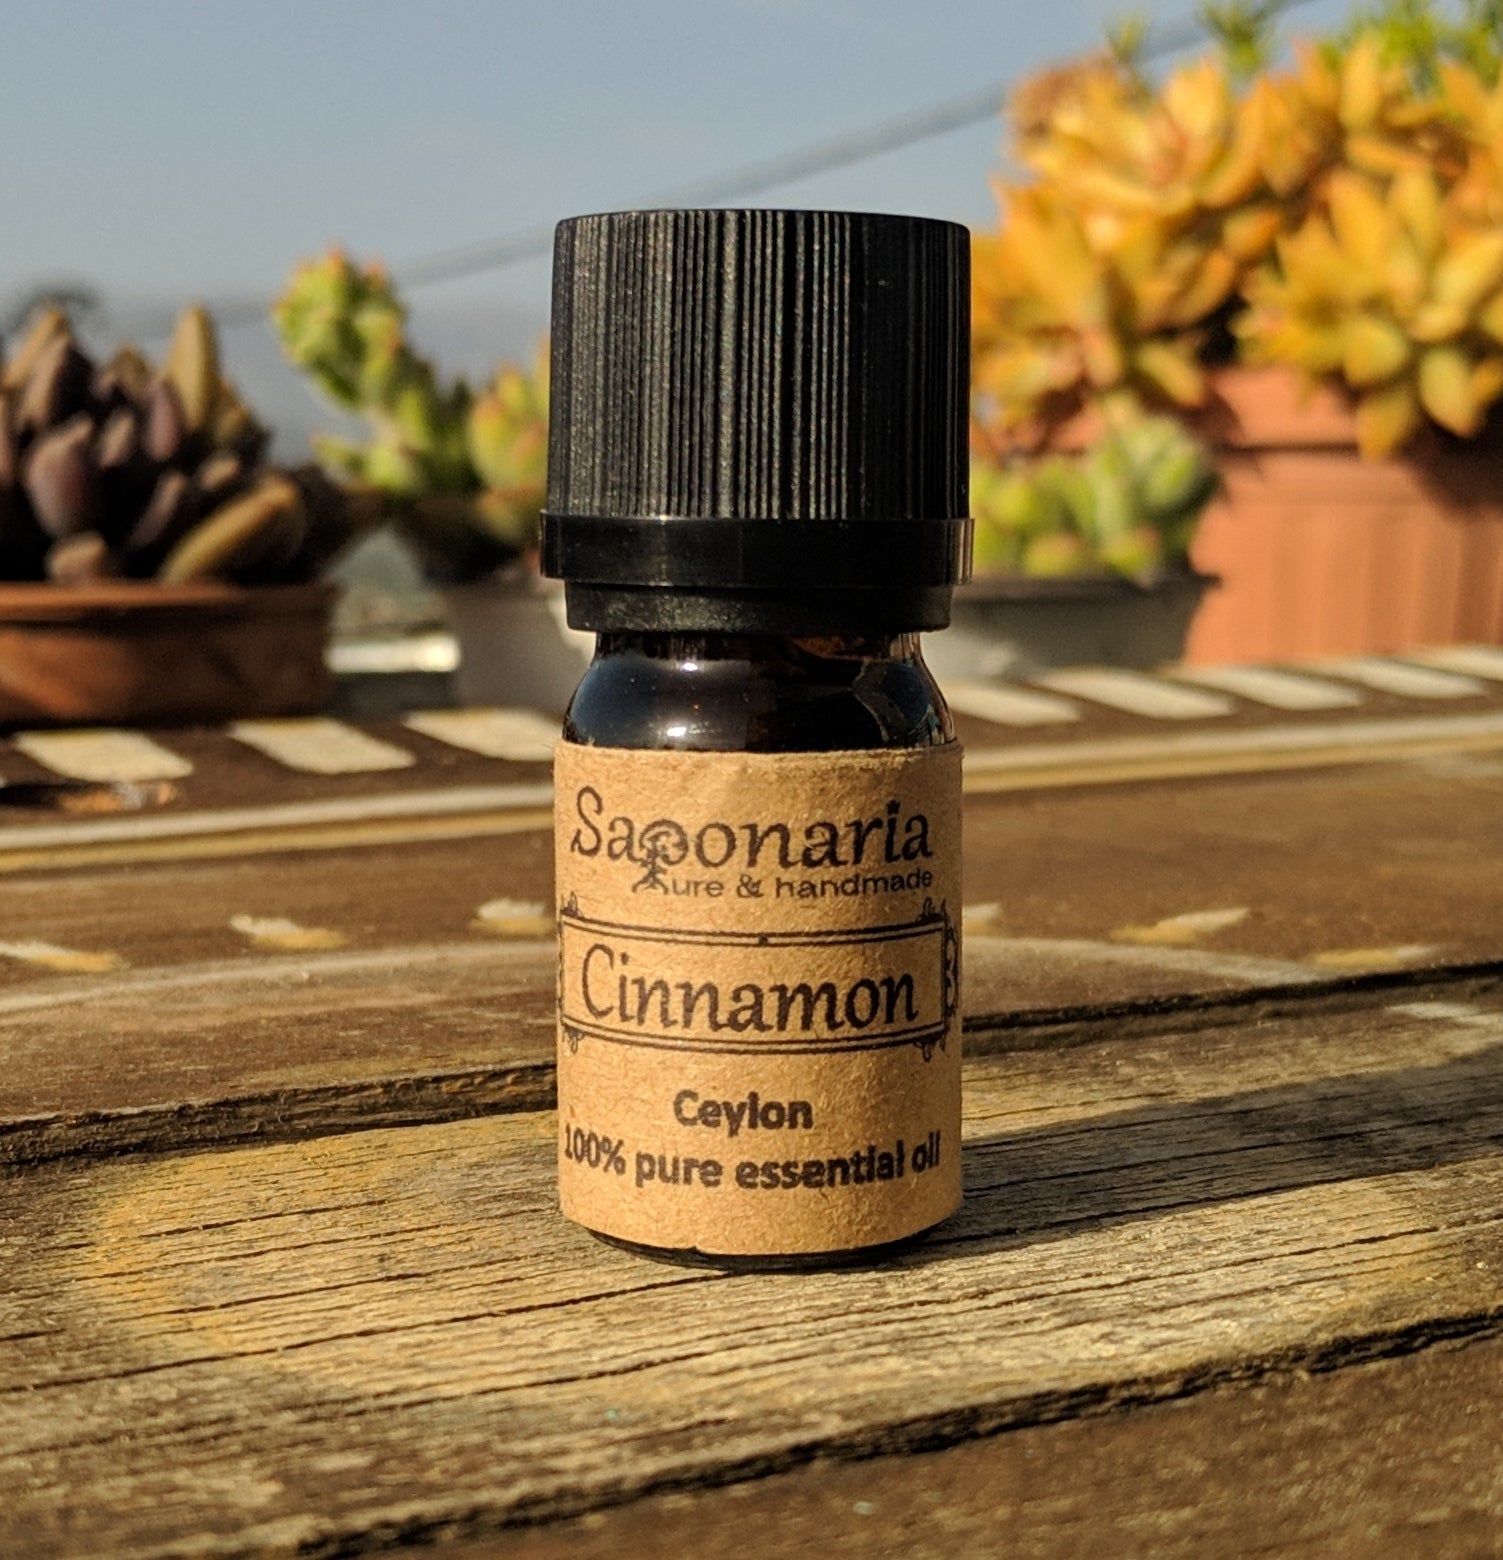 Cinnamon (Ceylon) Essential Oil